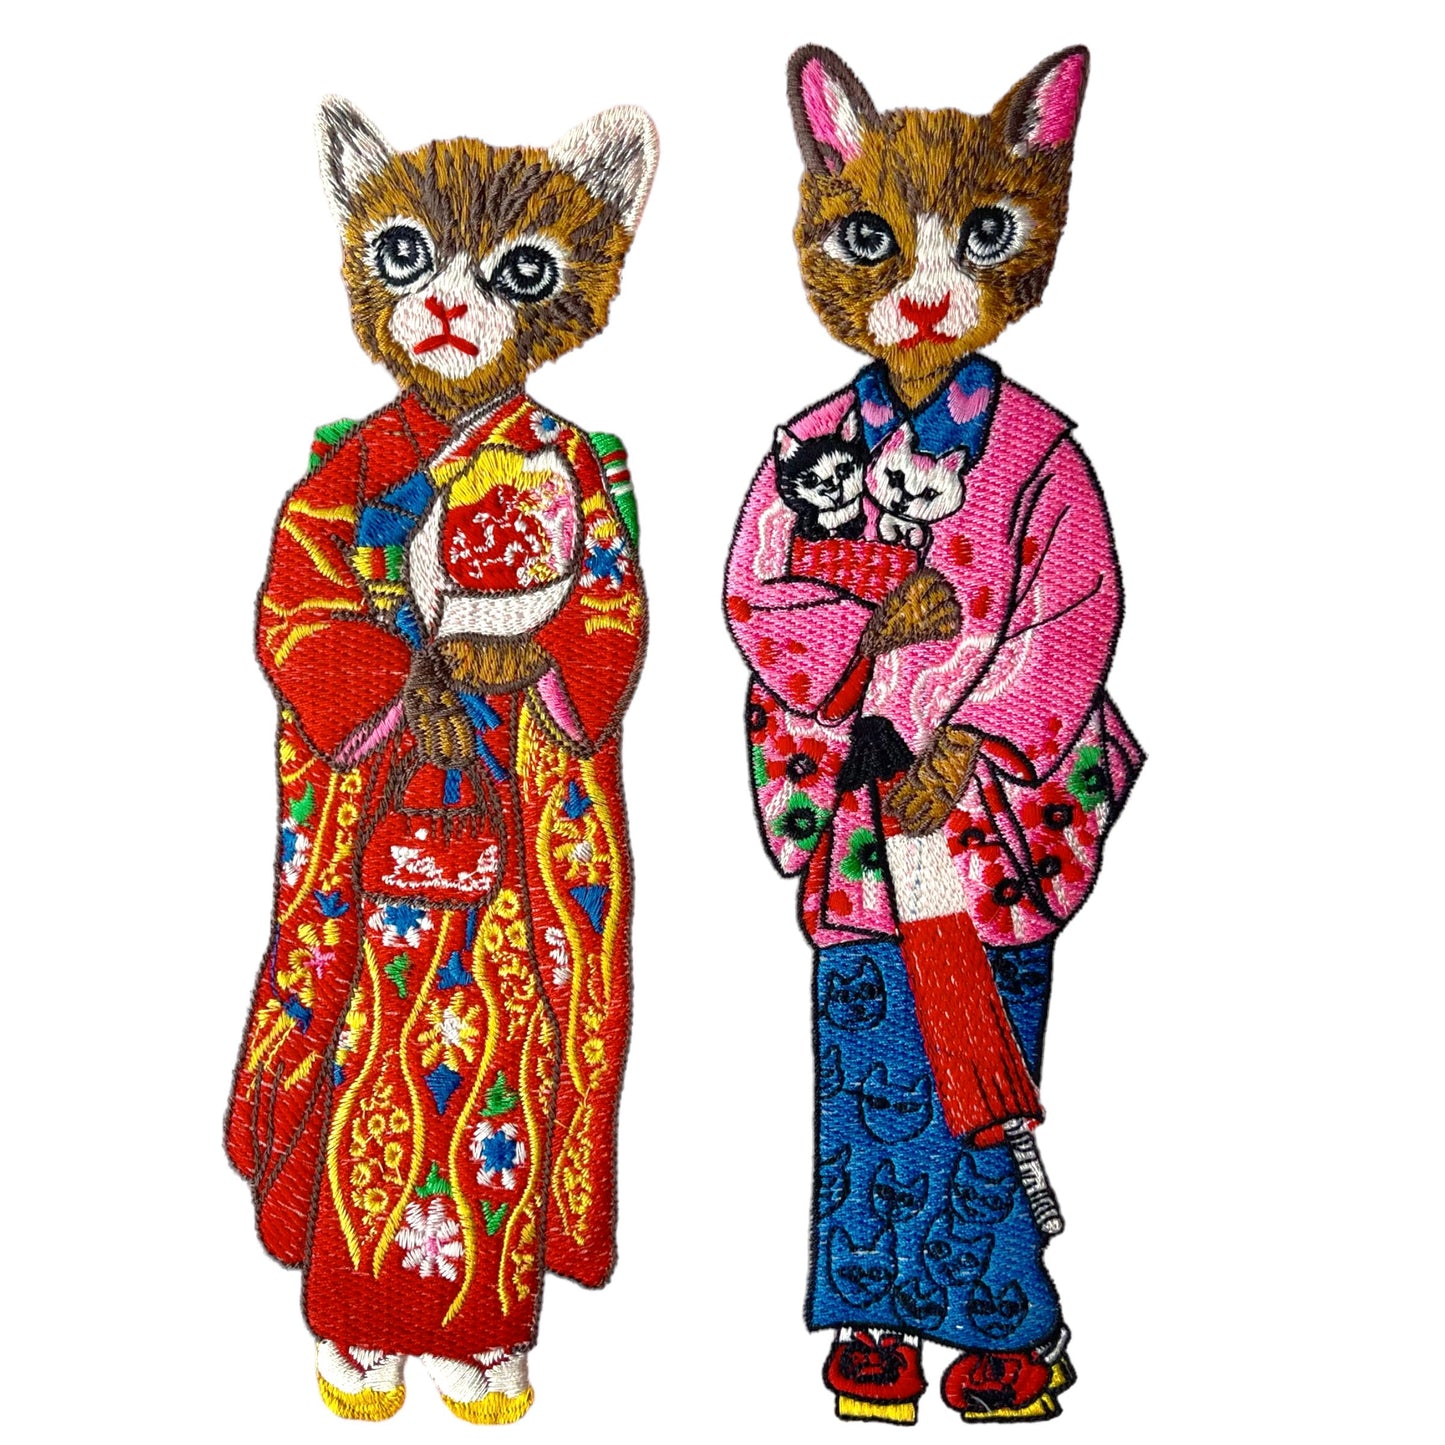 Kimono cat embroidery sweatshirt